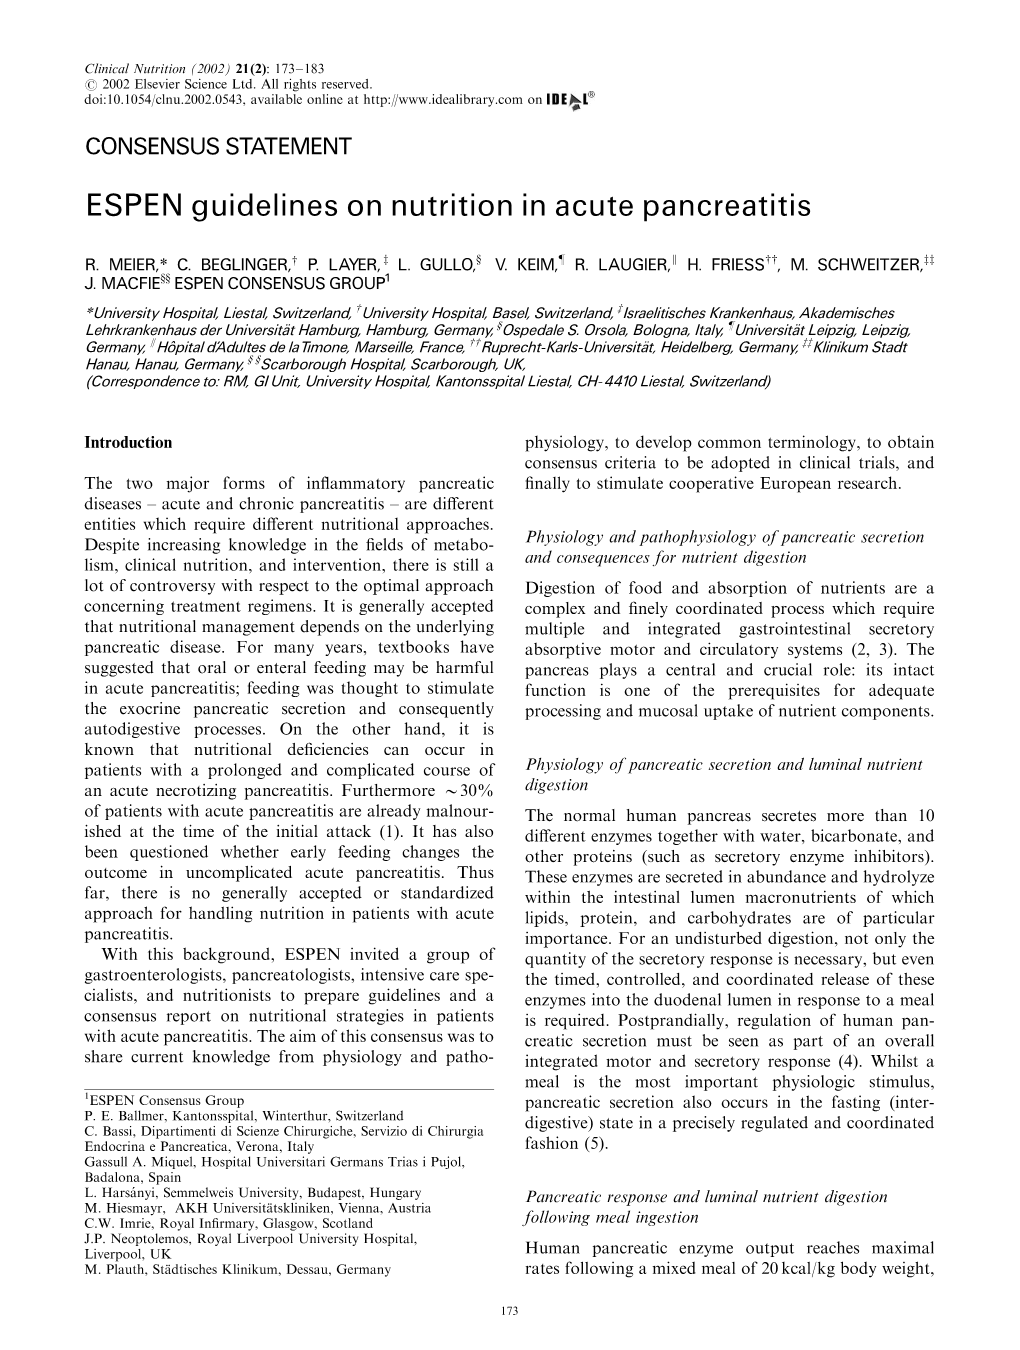 ESPEN Guidelines on Nutrition in Acute Pancreatitis